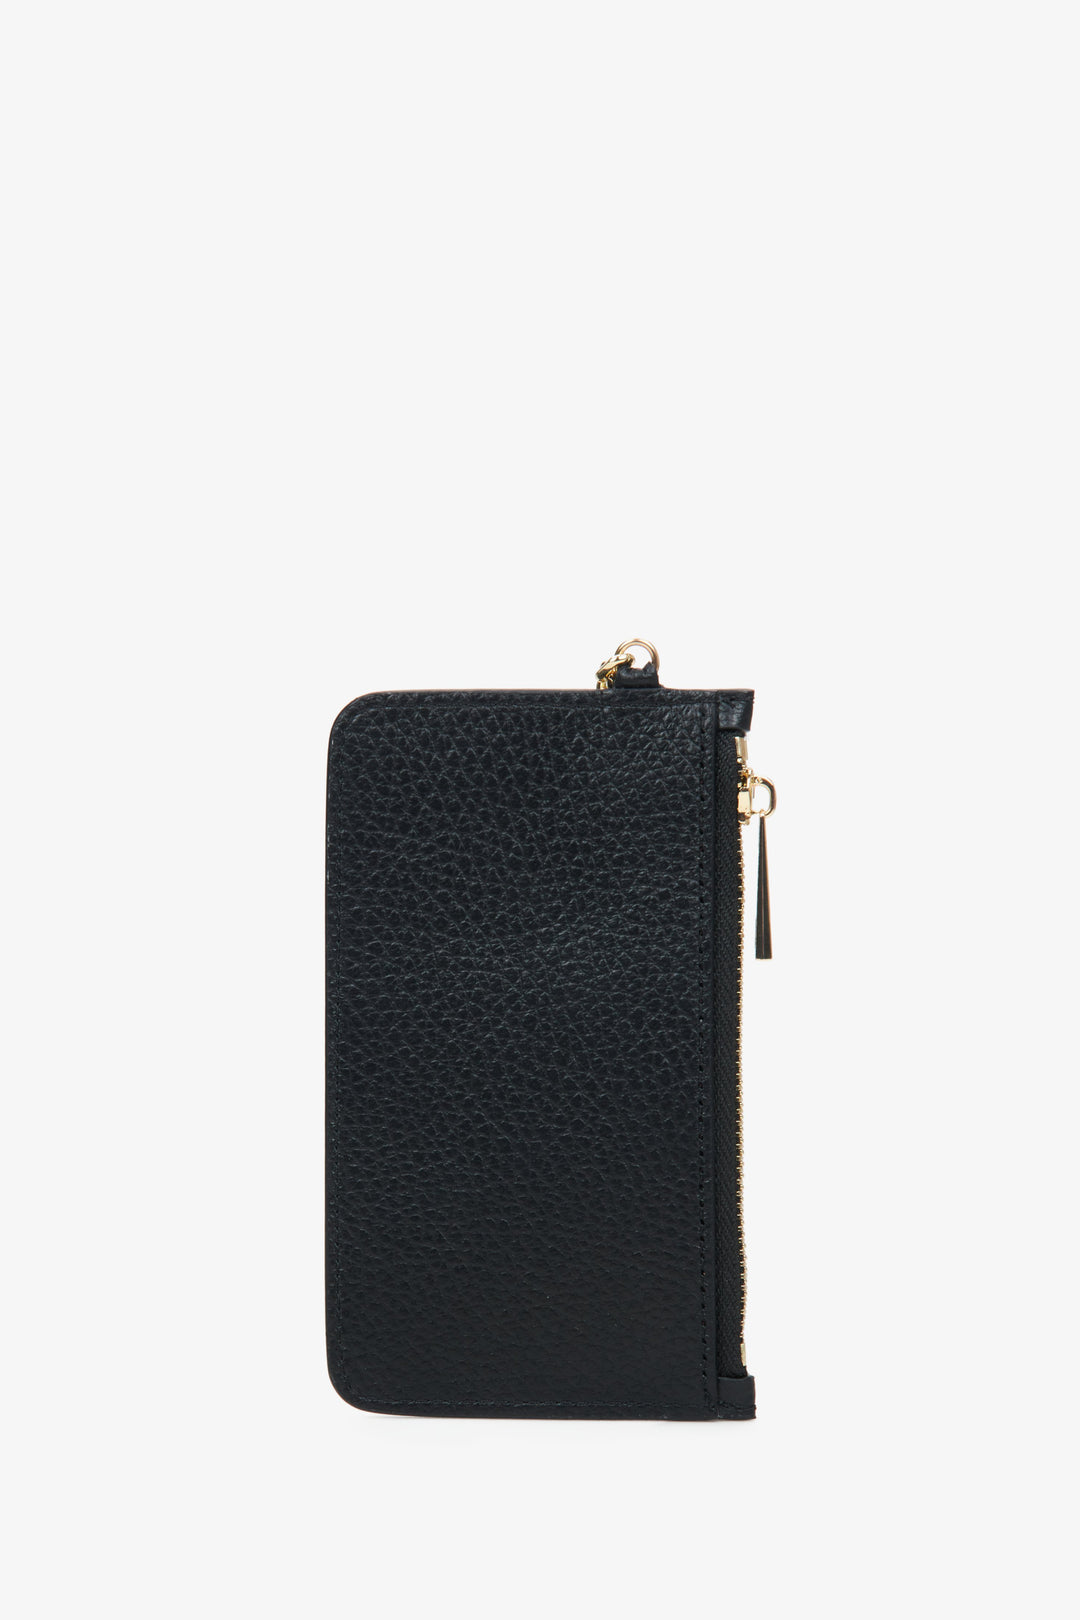 Estro women's compact black wallet - reverse side.